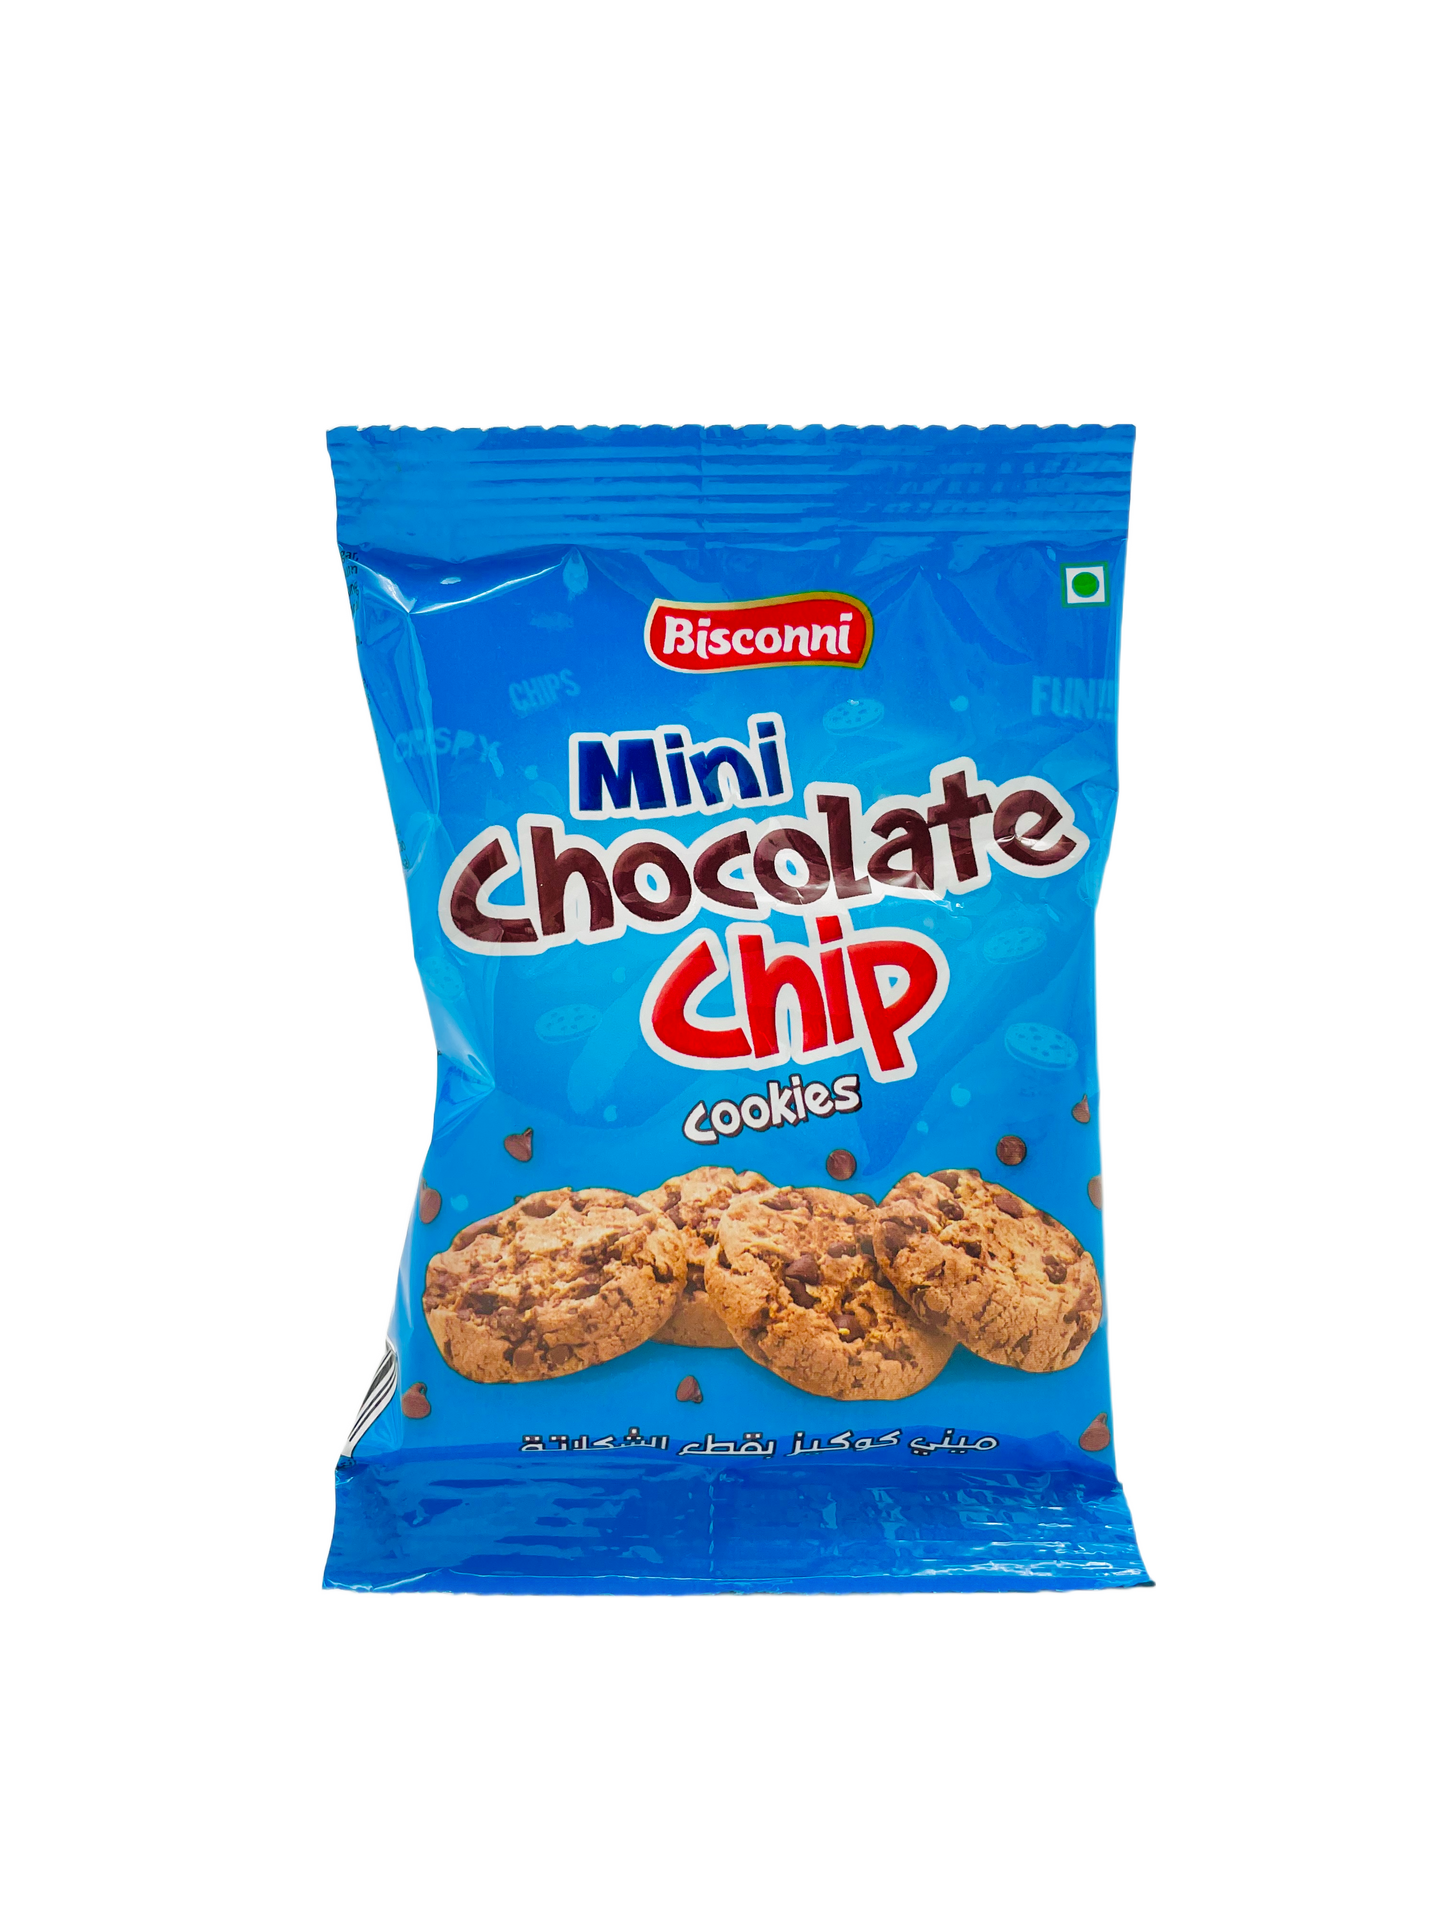 Bisconni Mini Chocolate Chip Cookies 21g